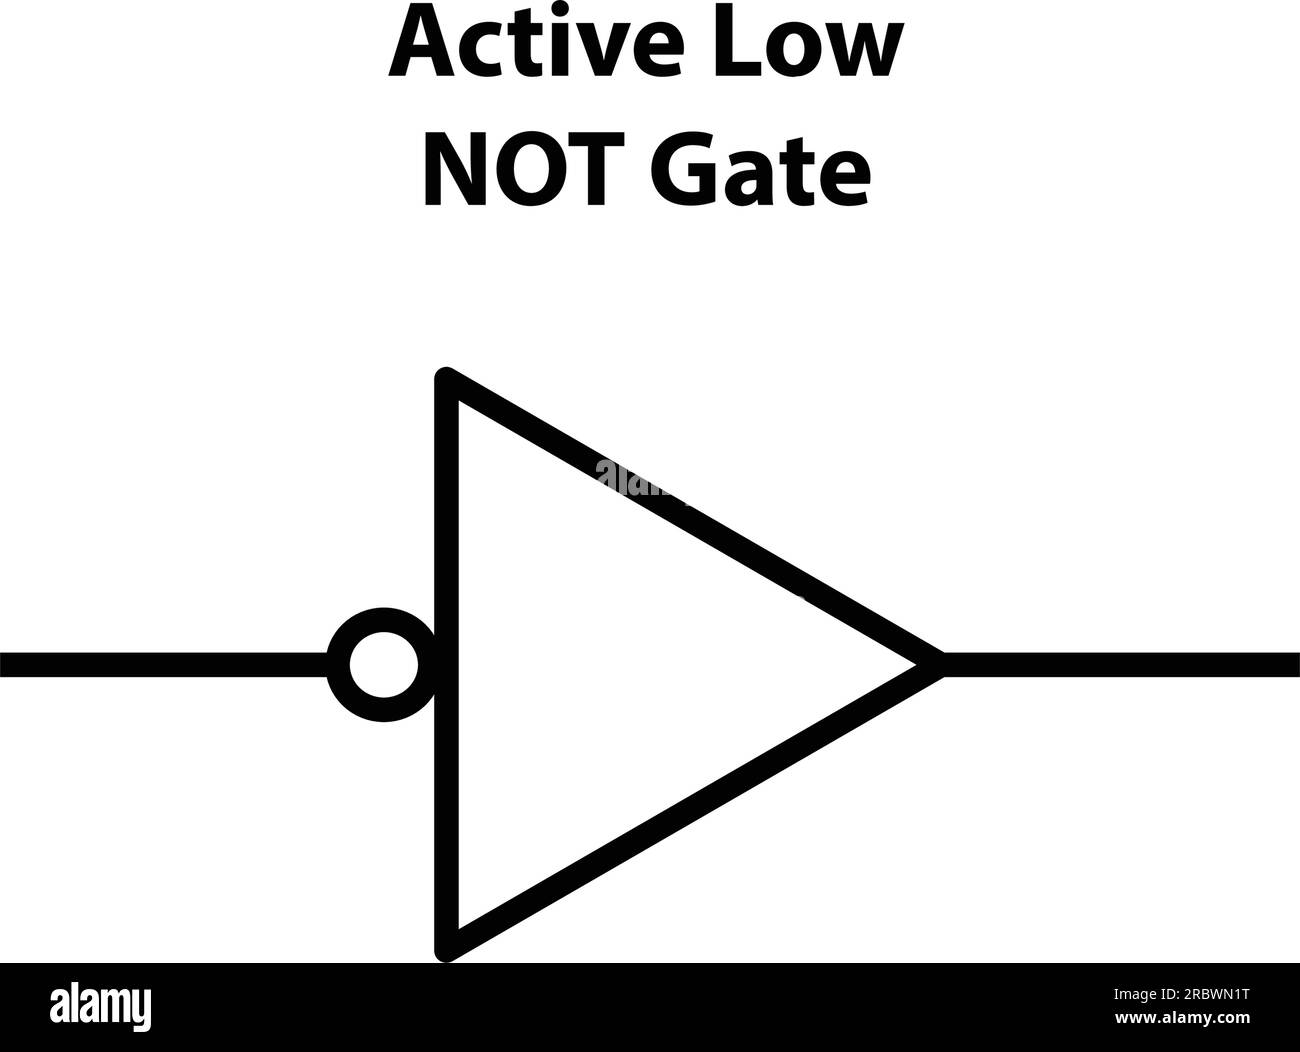 NOT Gate logic inverter. electronic symbol of illustration of basic circuit symbols. Electrical symbols, study content of physics Stock Vector